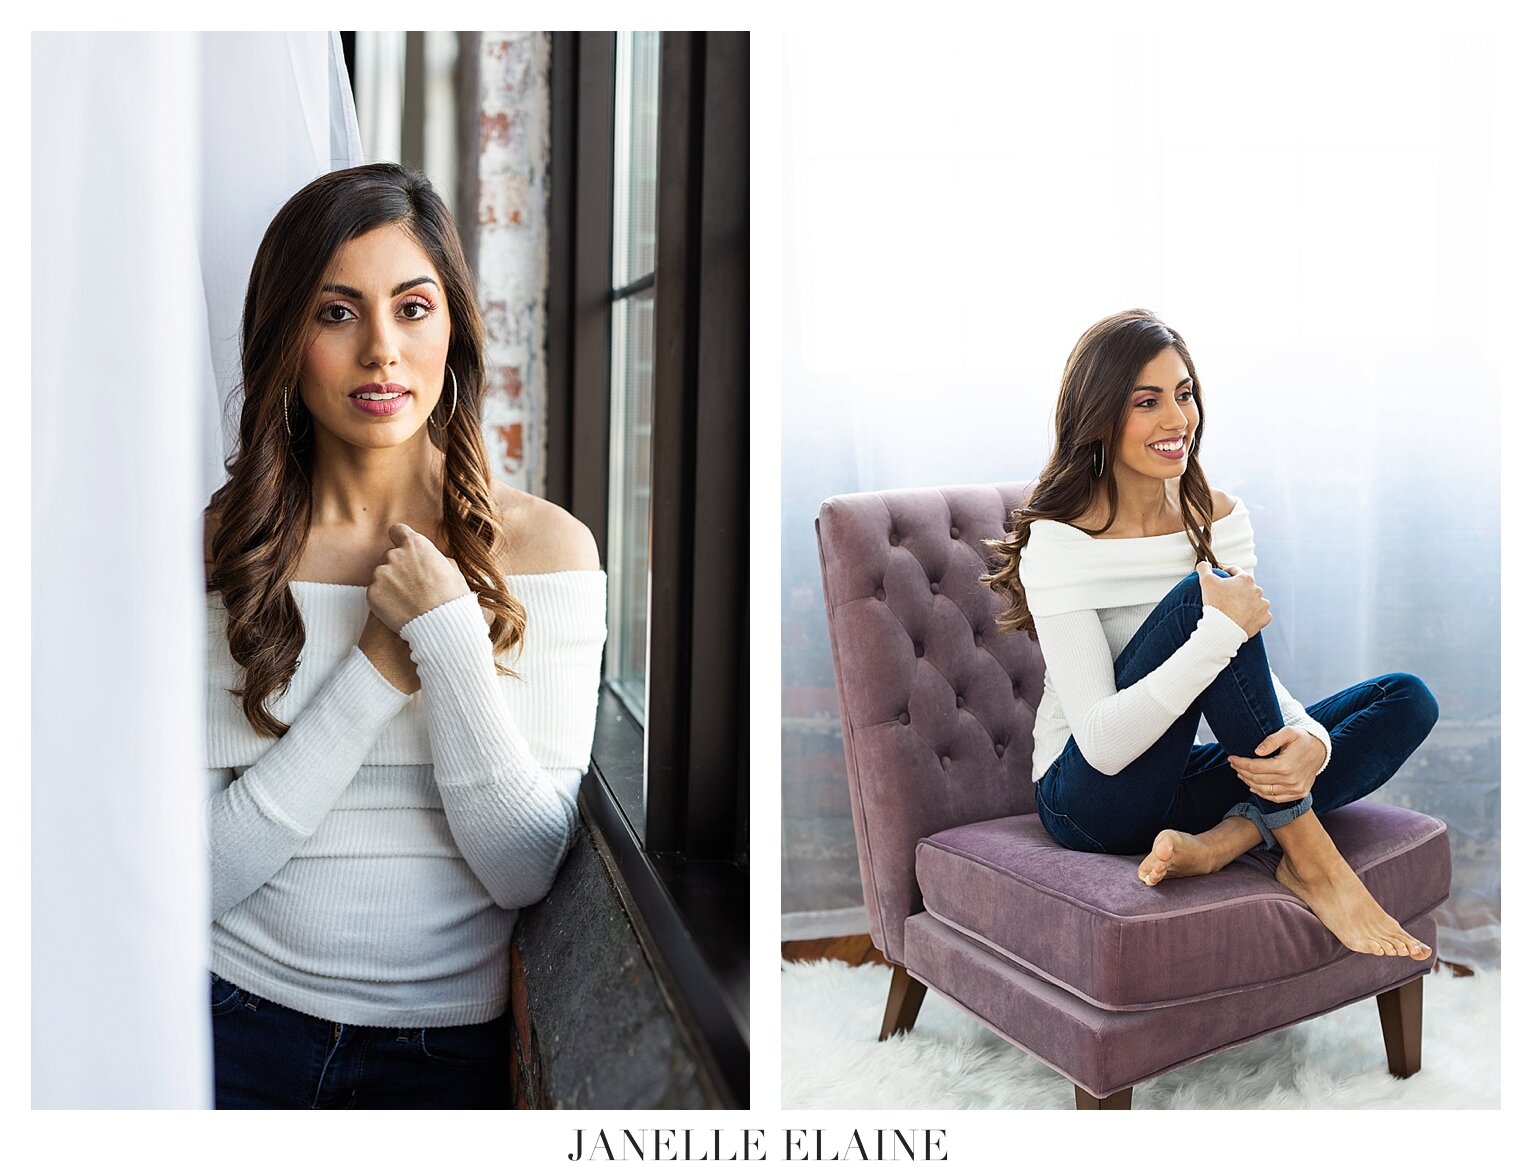 Chamari-Branding-Beauty-Portraits-Seattle-Studio-Janelle-Elaine-Photography-2.jpg